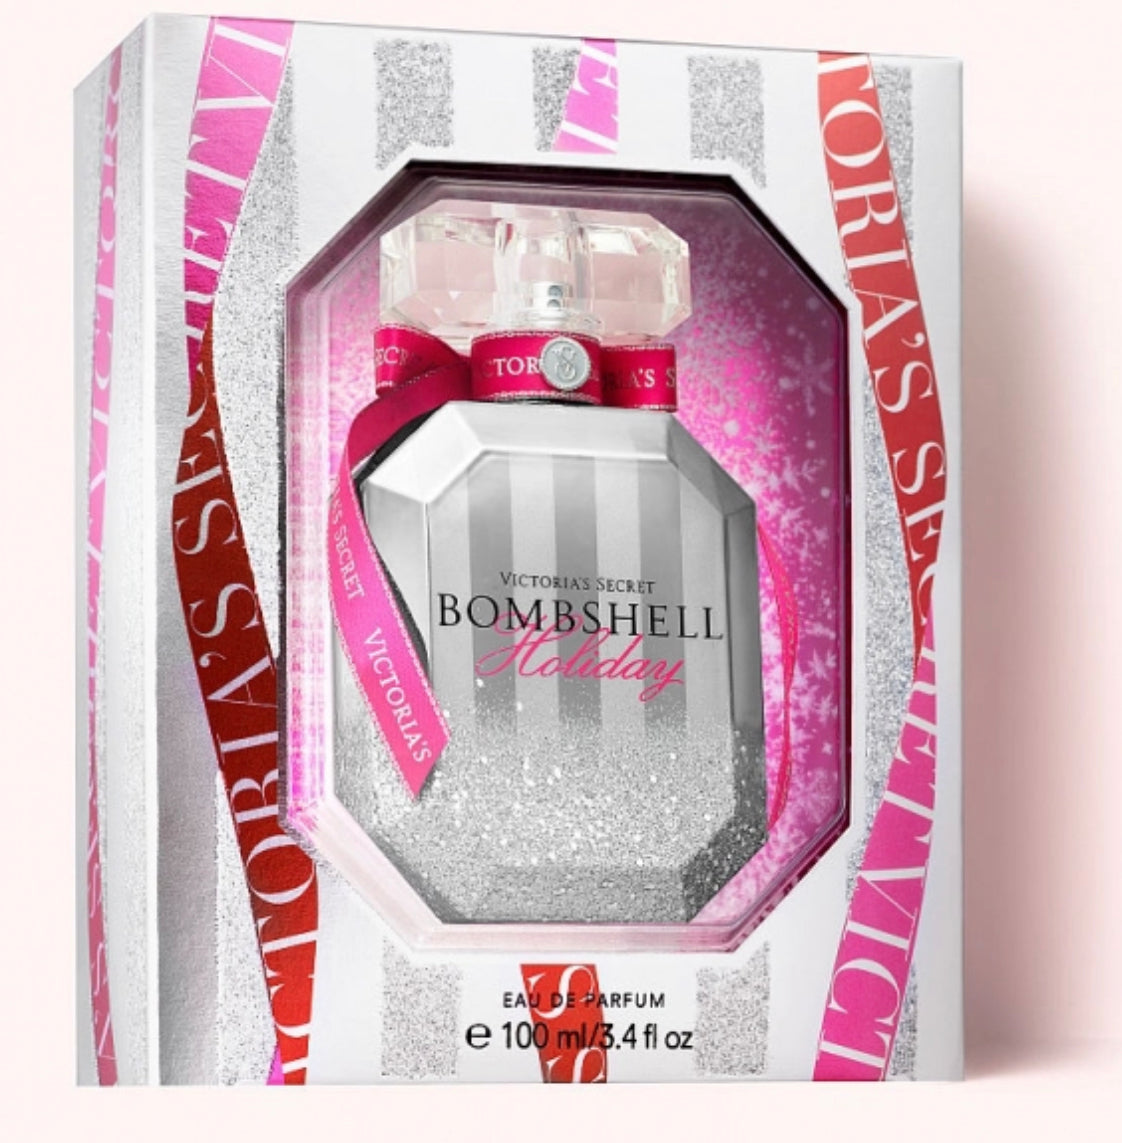 ,,Victoria’s Secret Bombshell Holiday” Fragrance